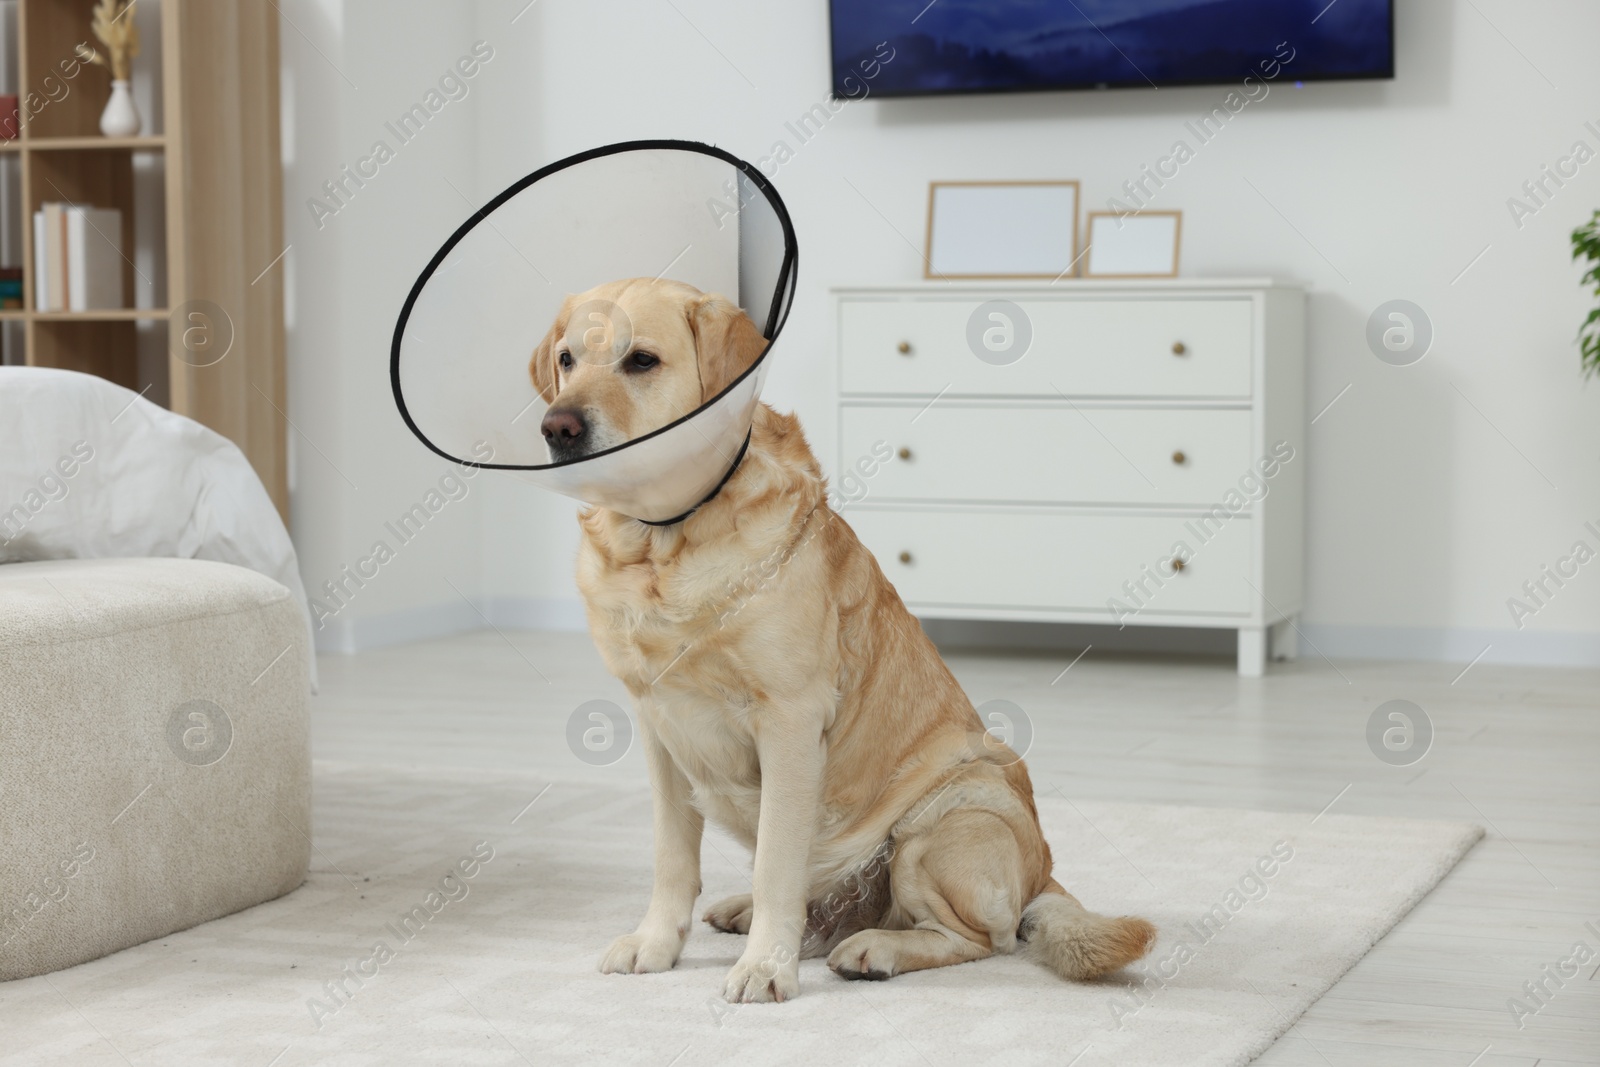 Photo of Cute Labrador Retriever with protective cone collar on floor in room